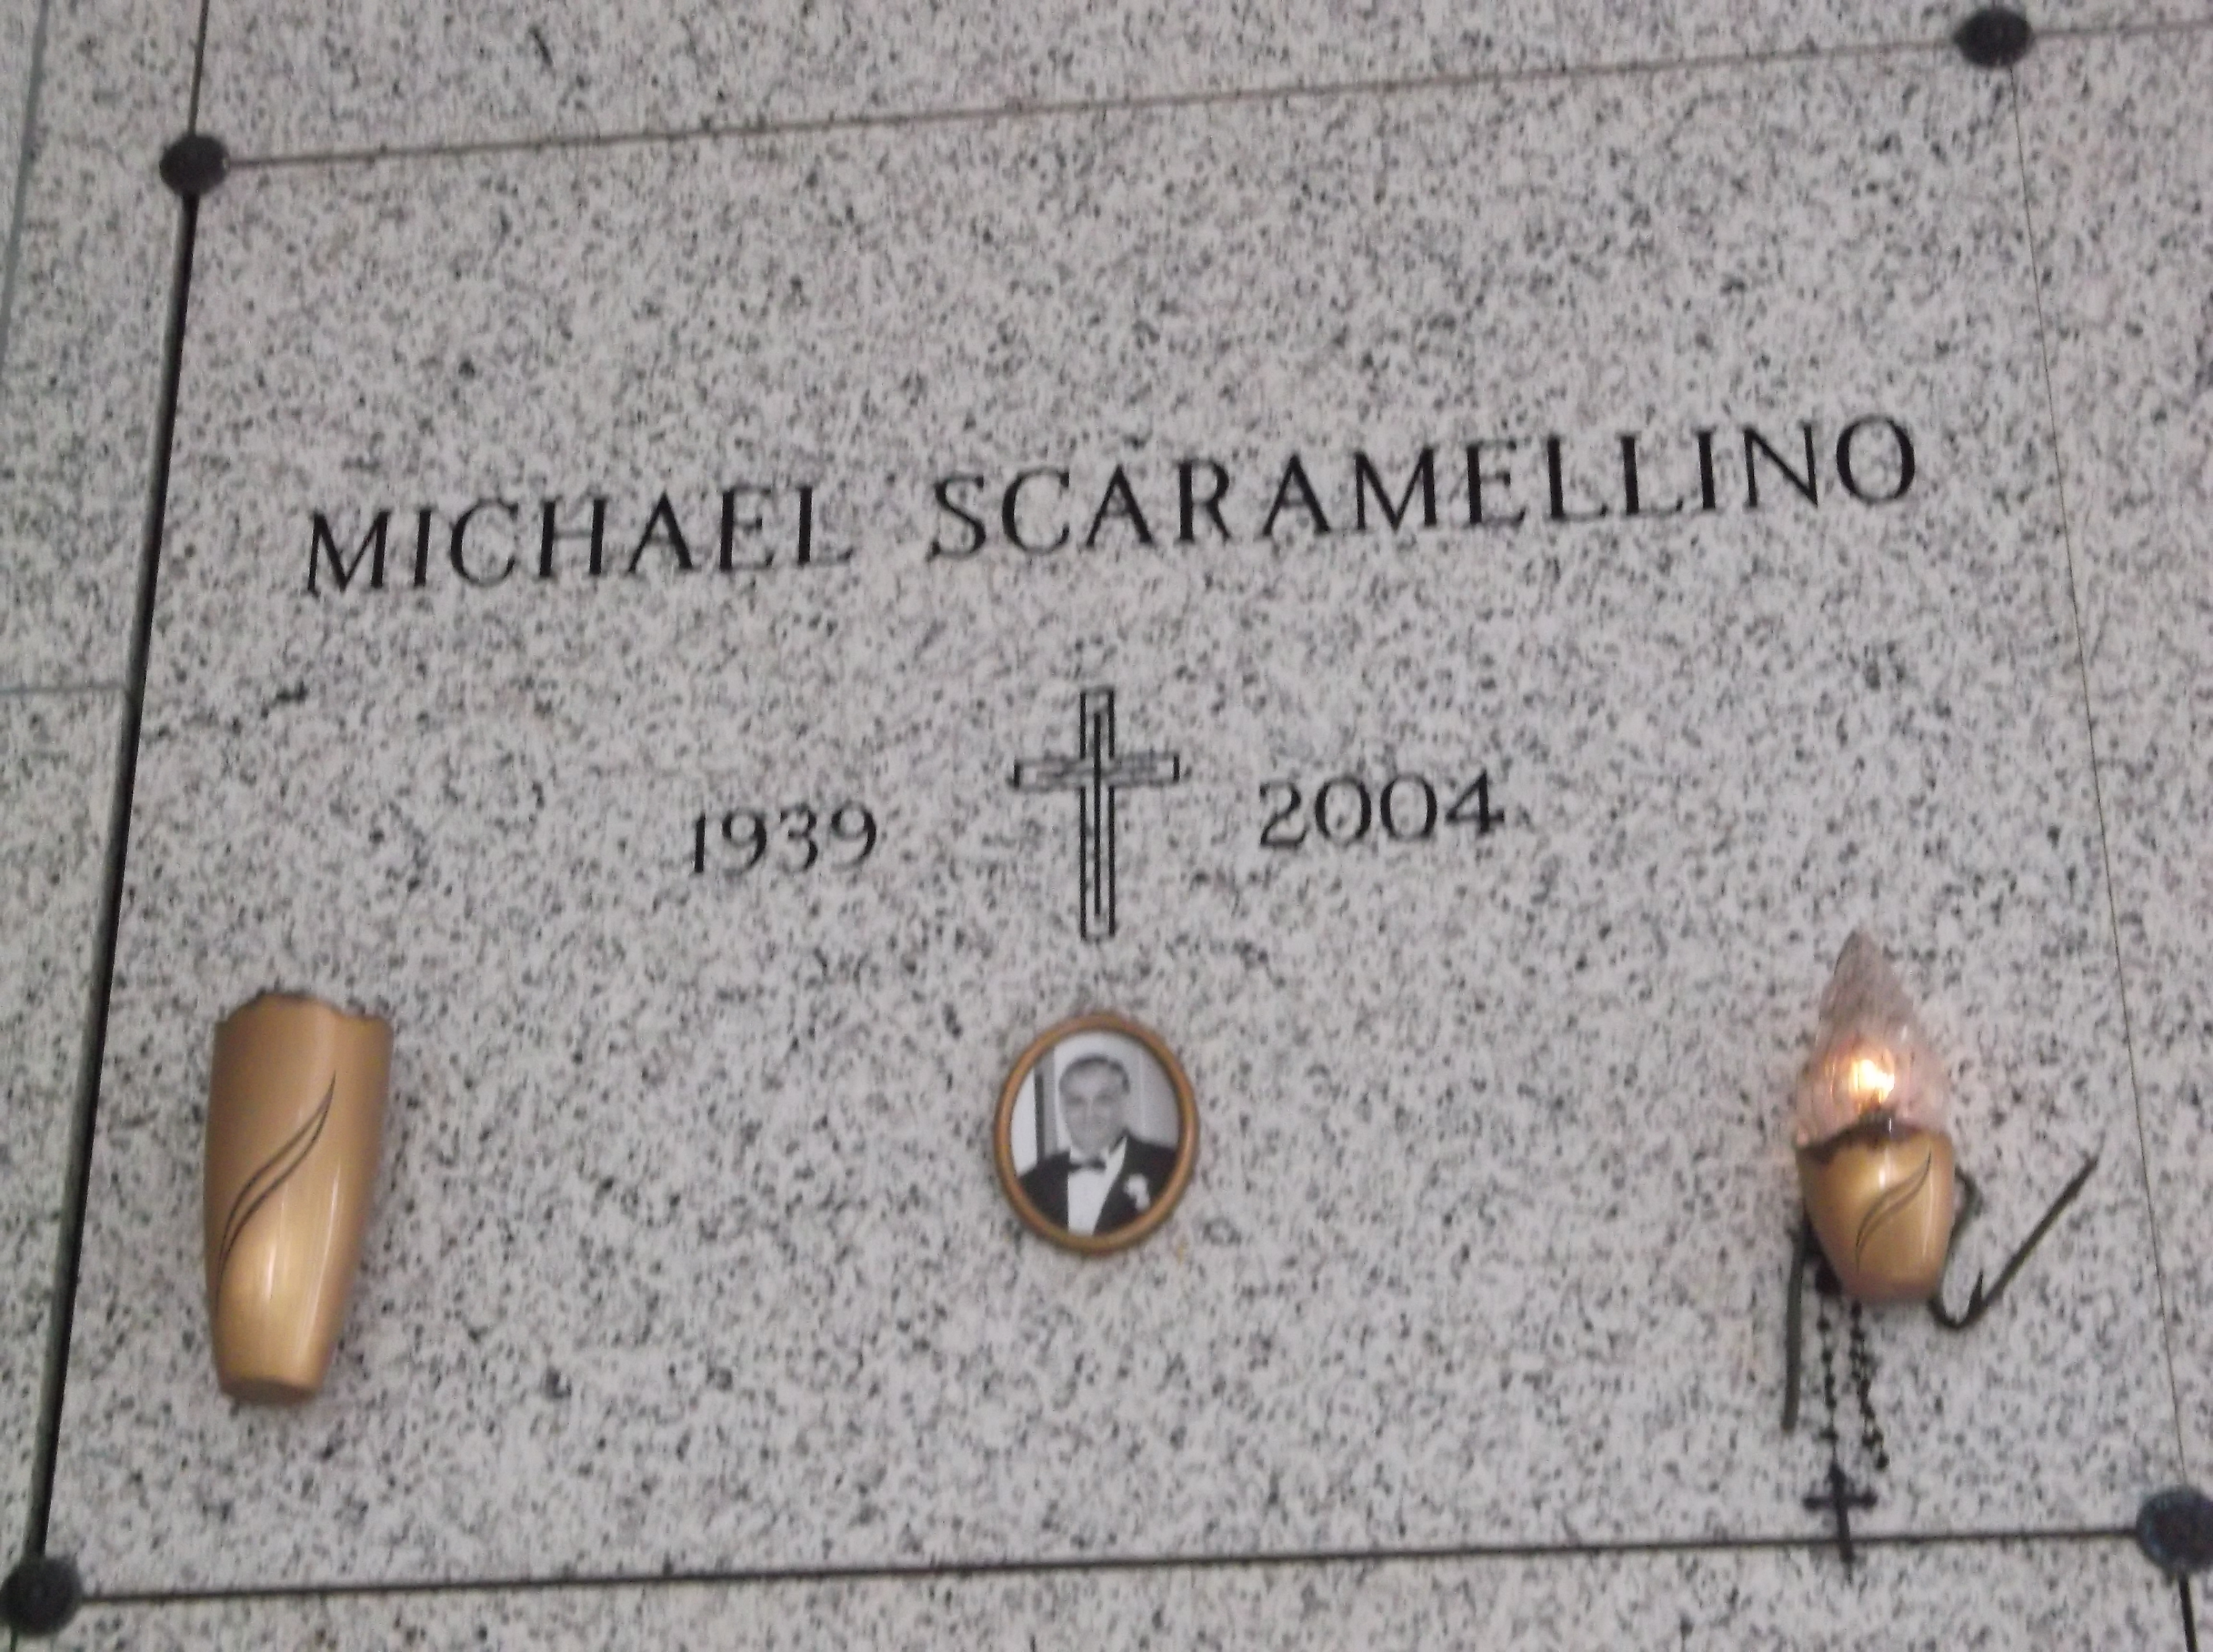 Michael Scaramellino